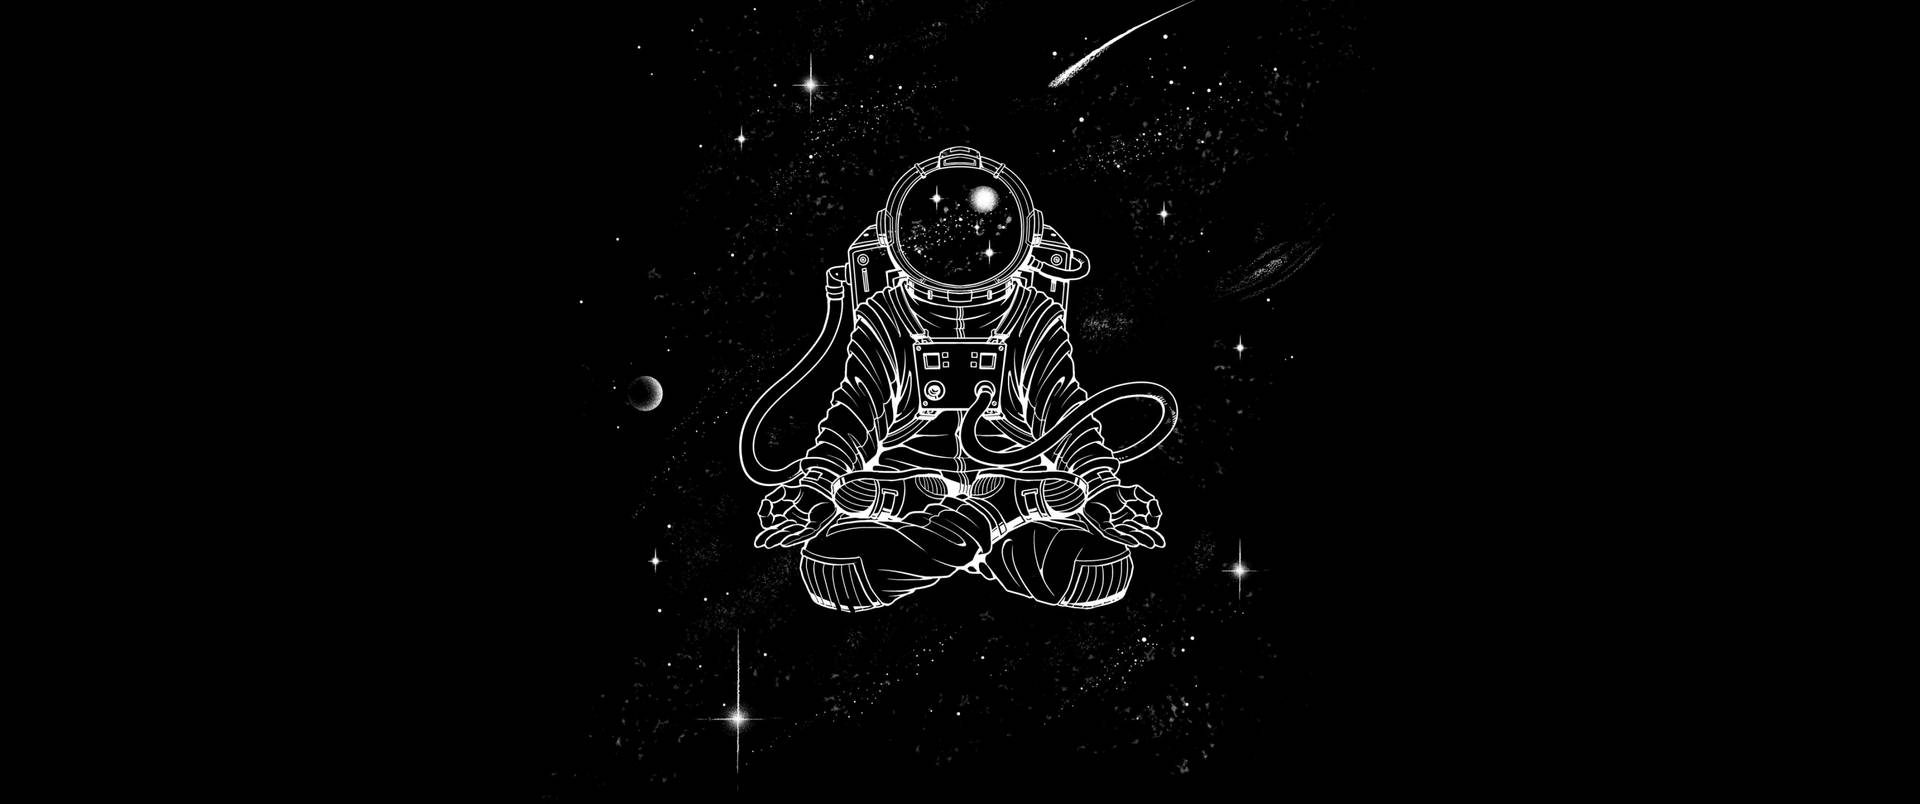 Black And White Astronaut Yoga Art Wallpaper